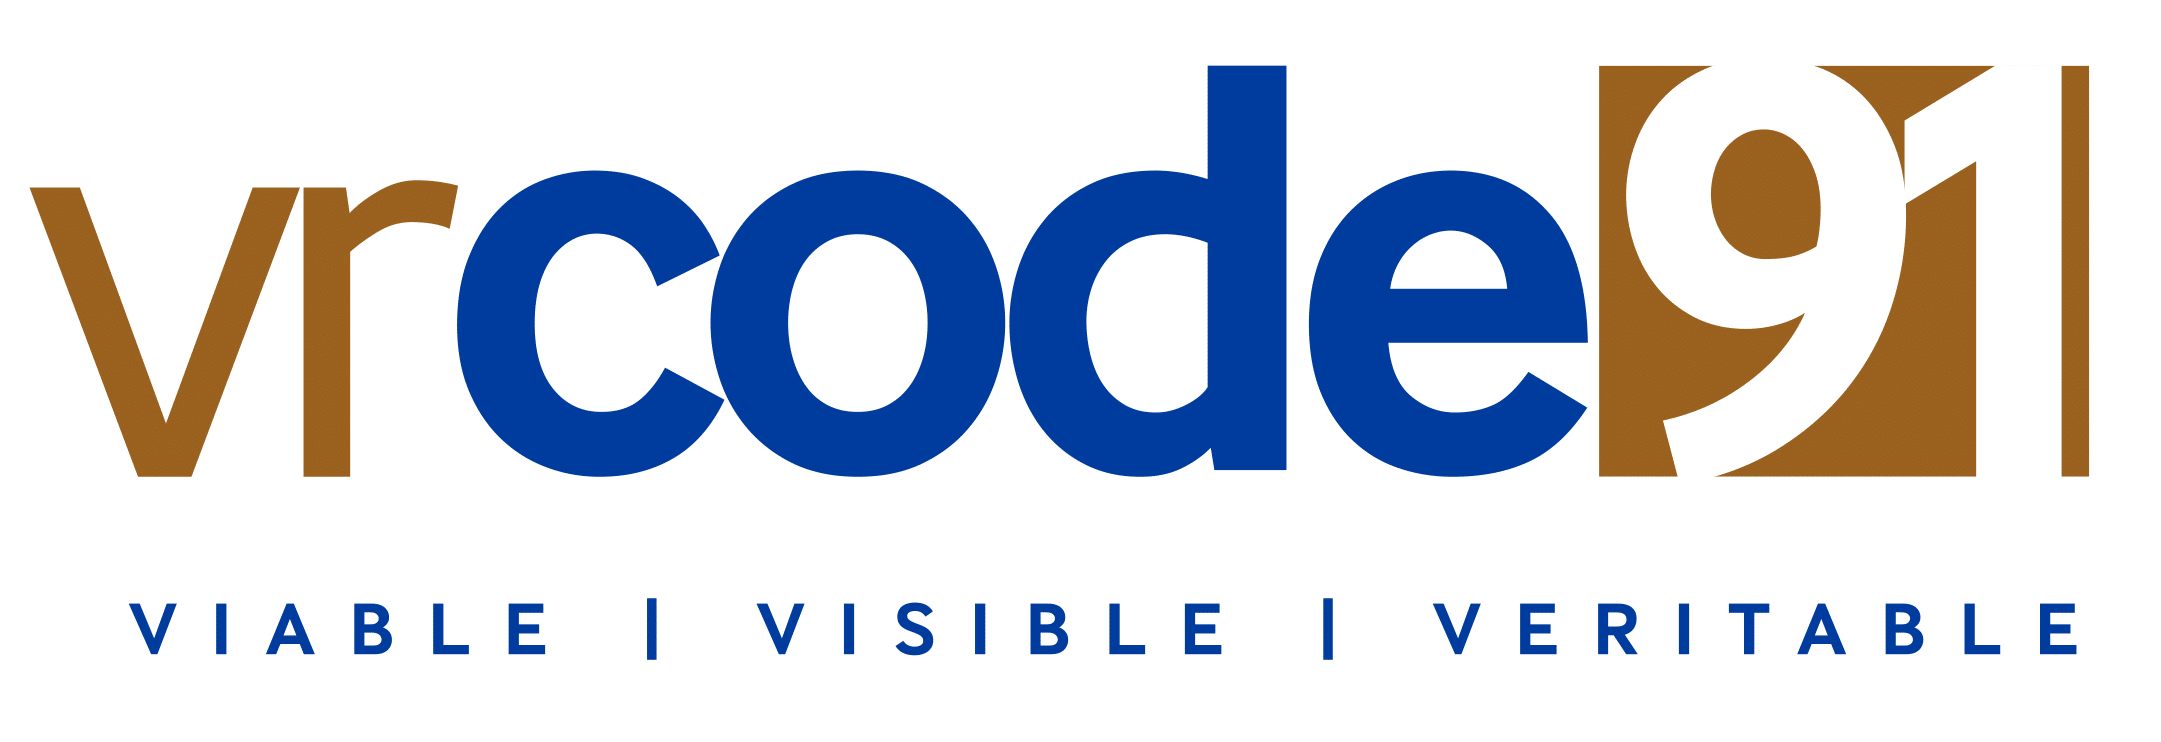 VRcode91 logo